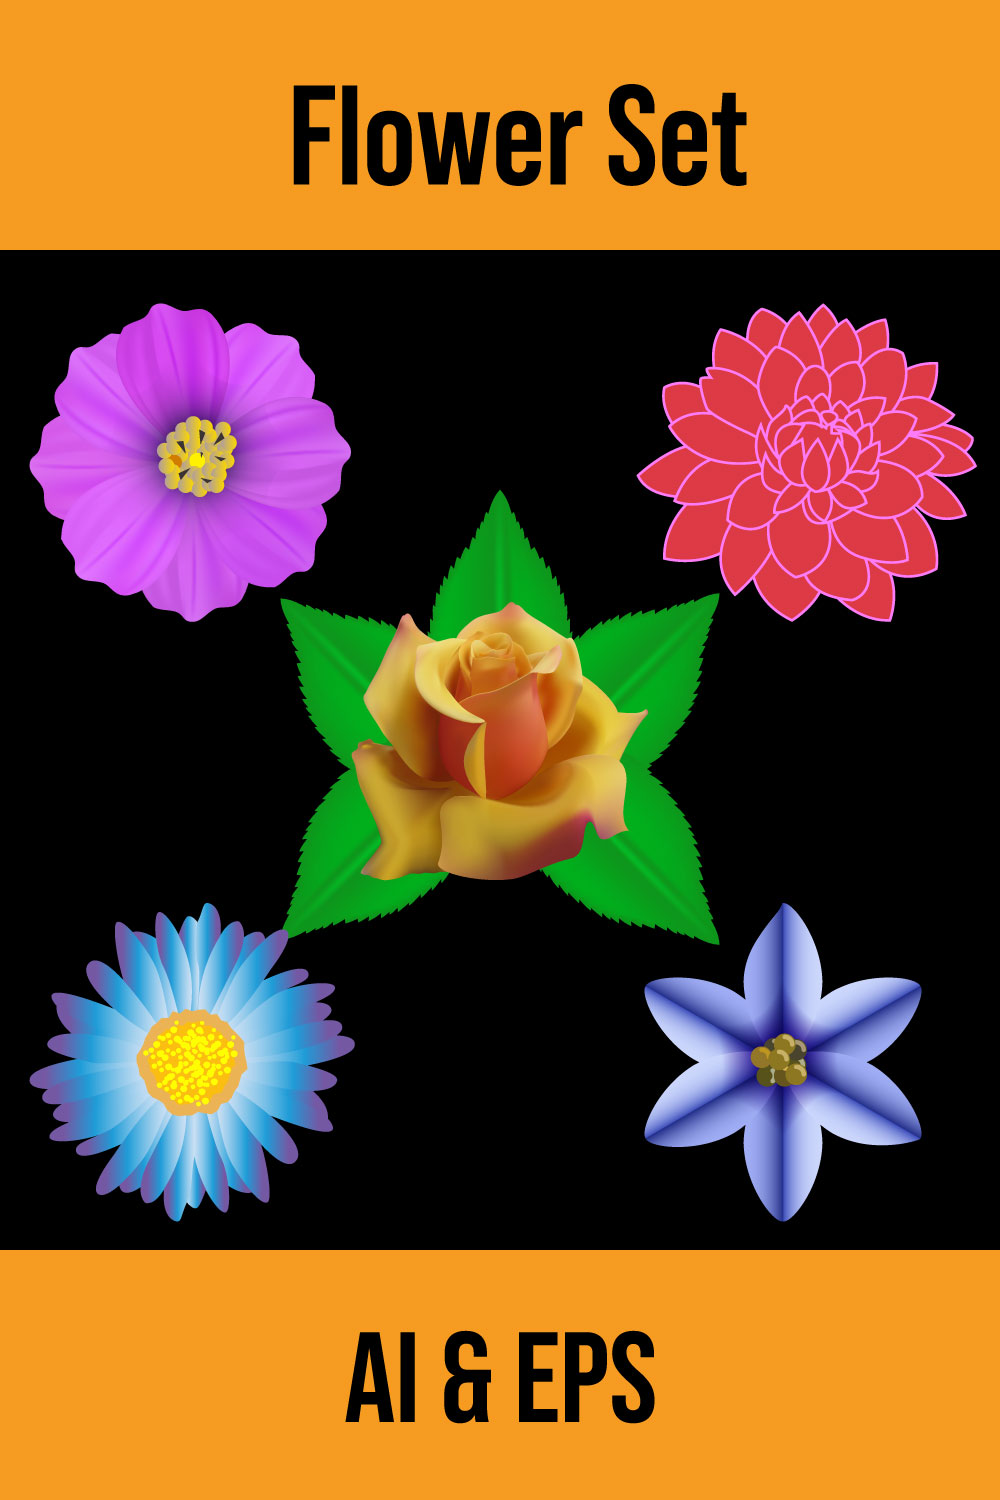 Flower Collection Vector Design pinterest image.